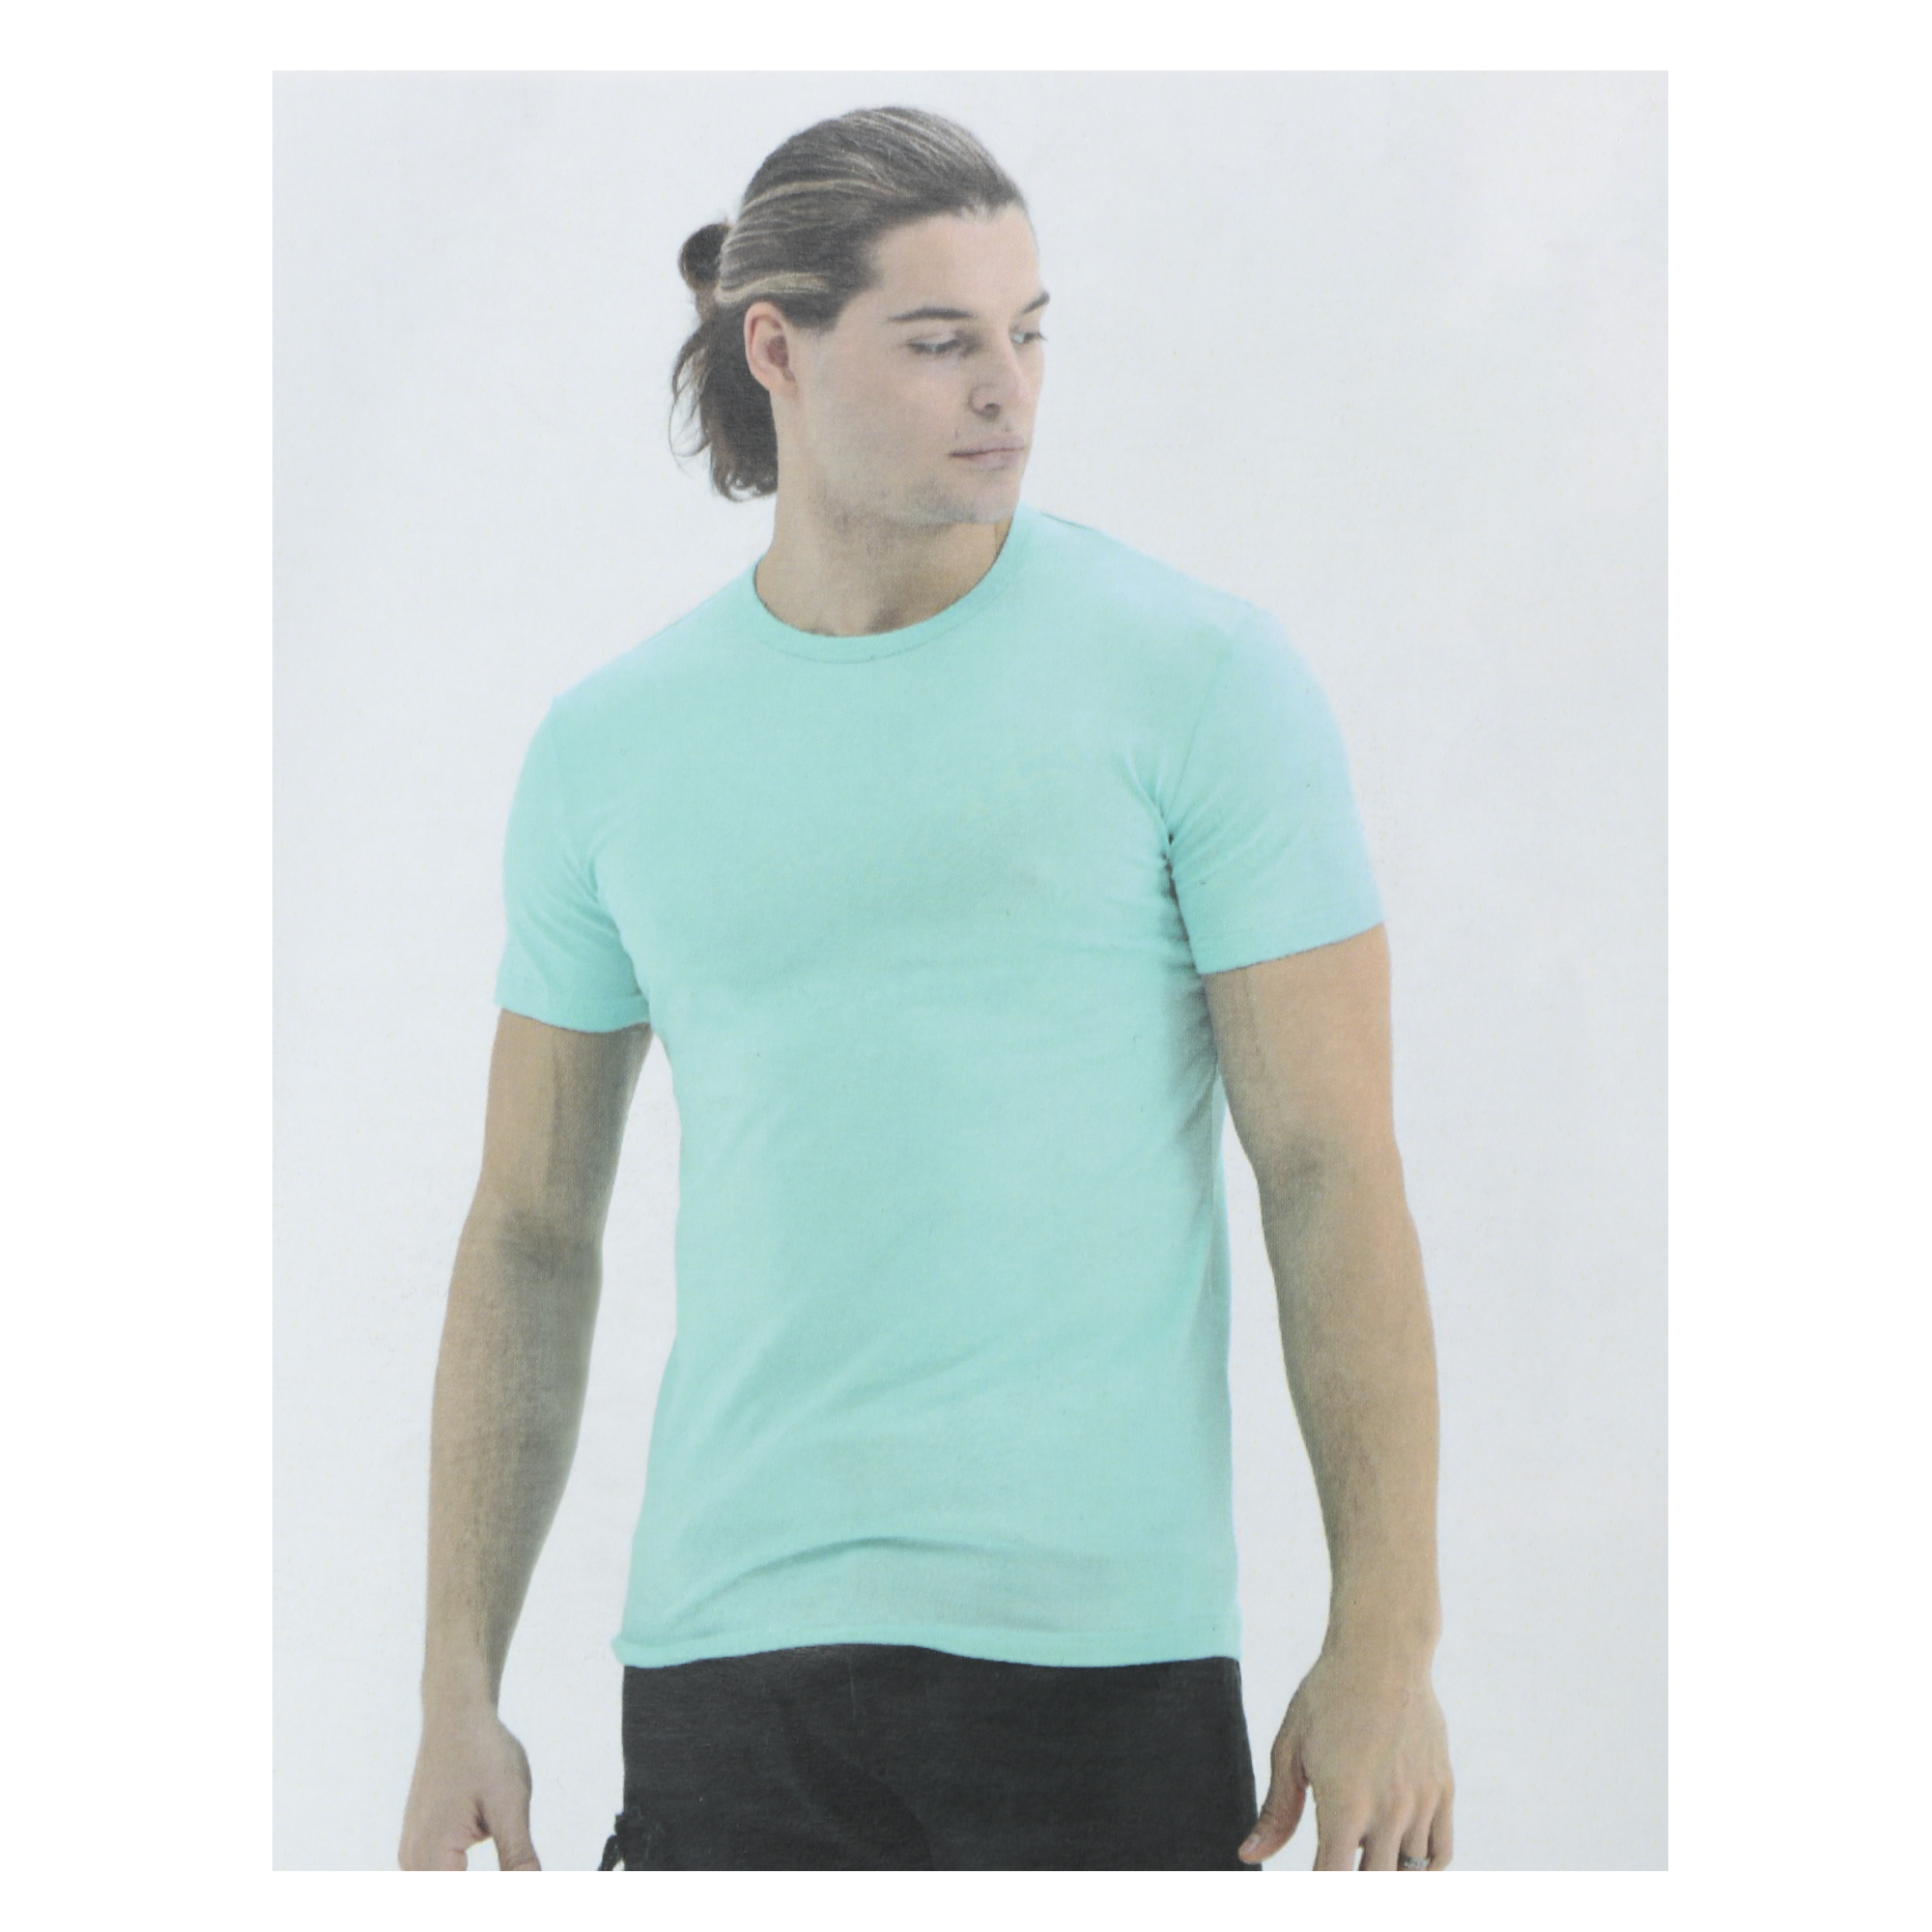 Мужская футболка Pantelemone MF-913 54 ментоловая, цвет ментоловый, размер 54 - фото 2